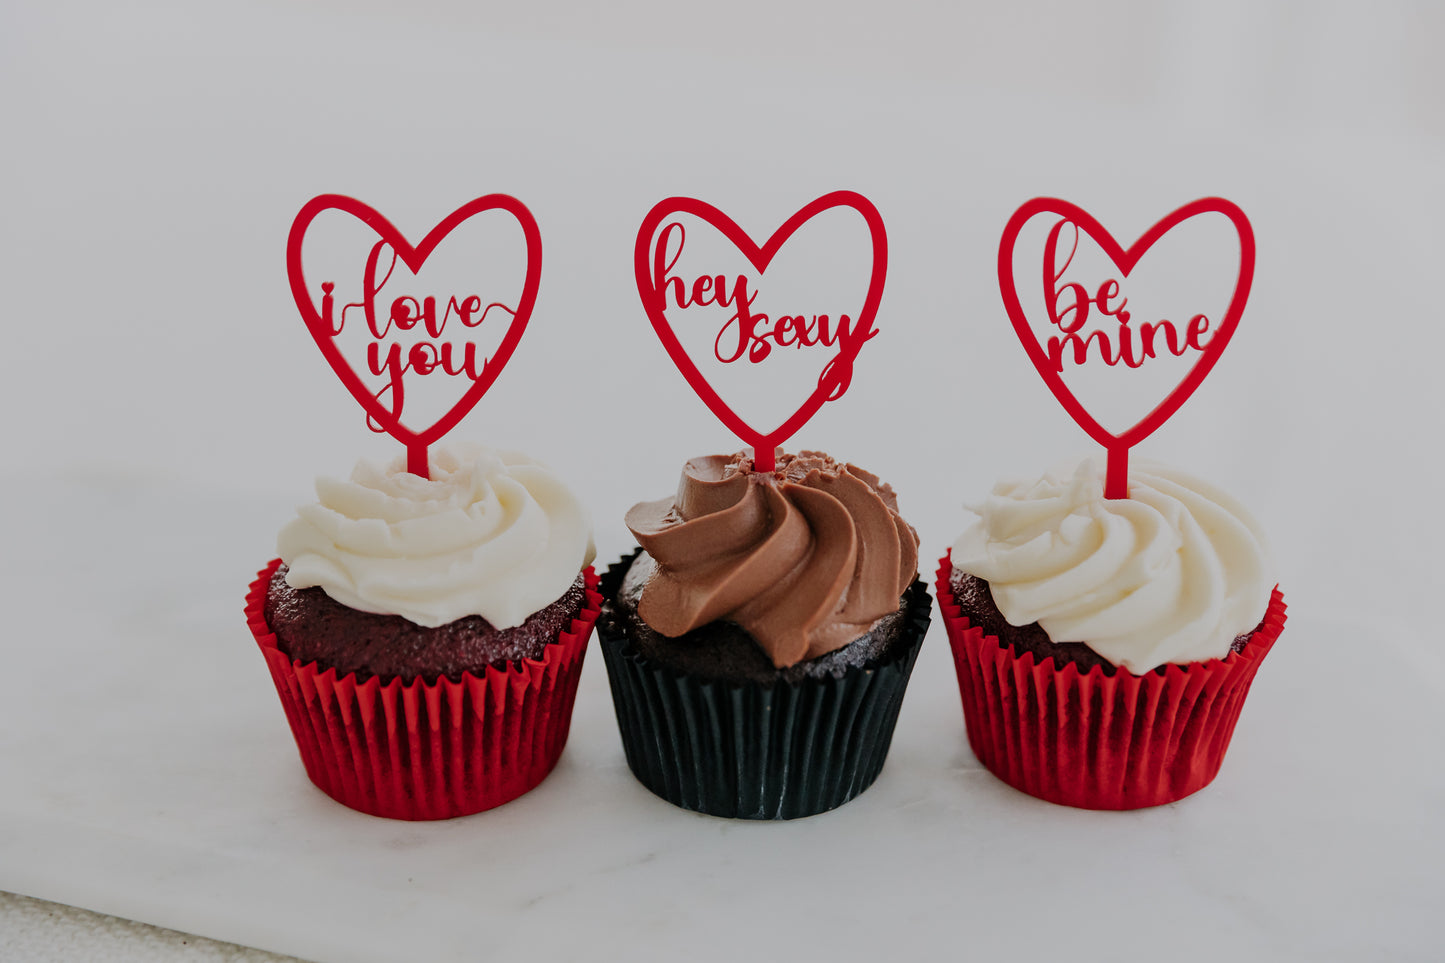 Valentine's Day Mini Cake Topper - "be mine"